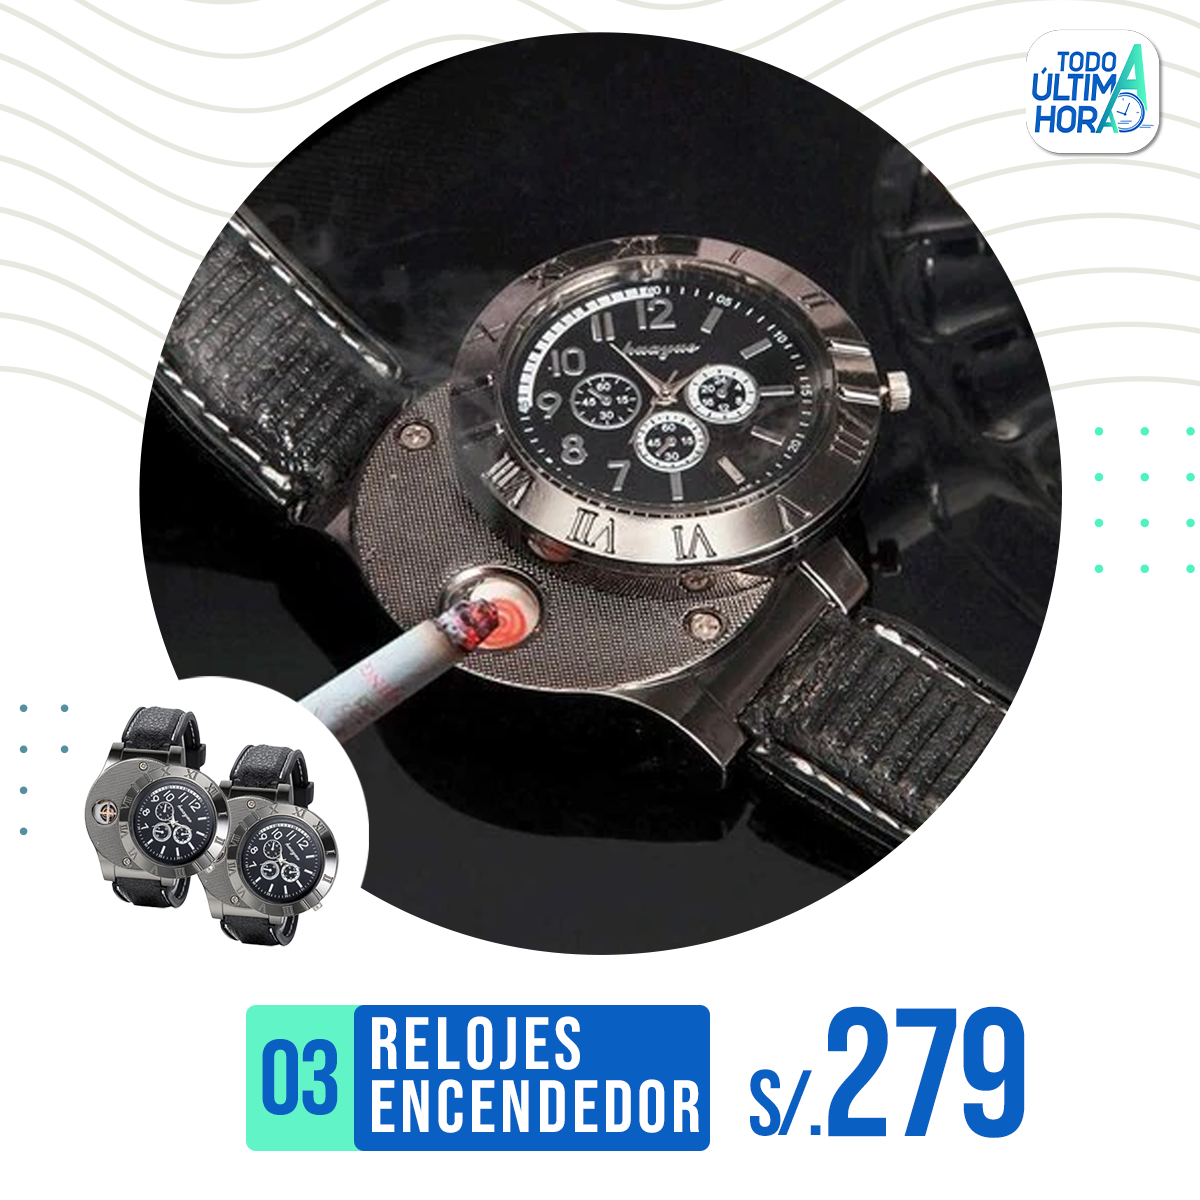 Reloj Encendedor Premium ⌚ TodoAUltimaHora